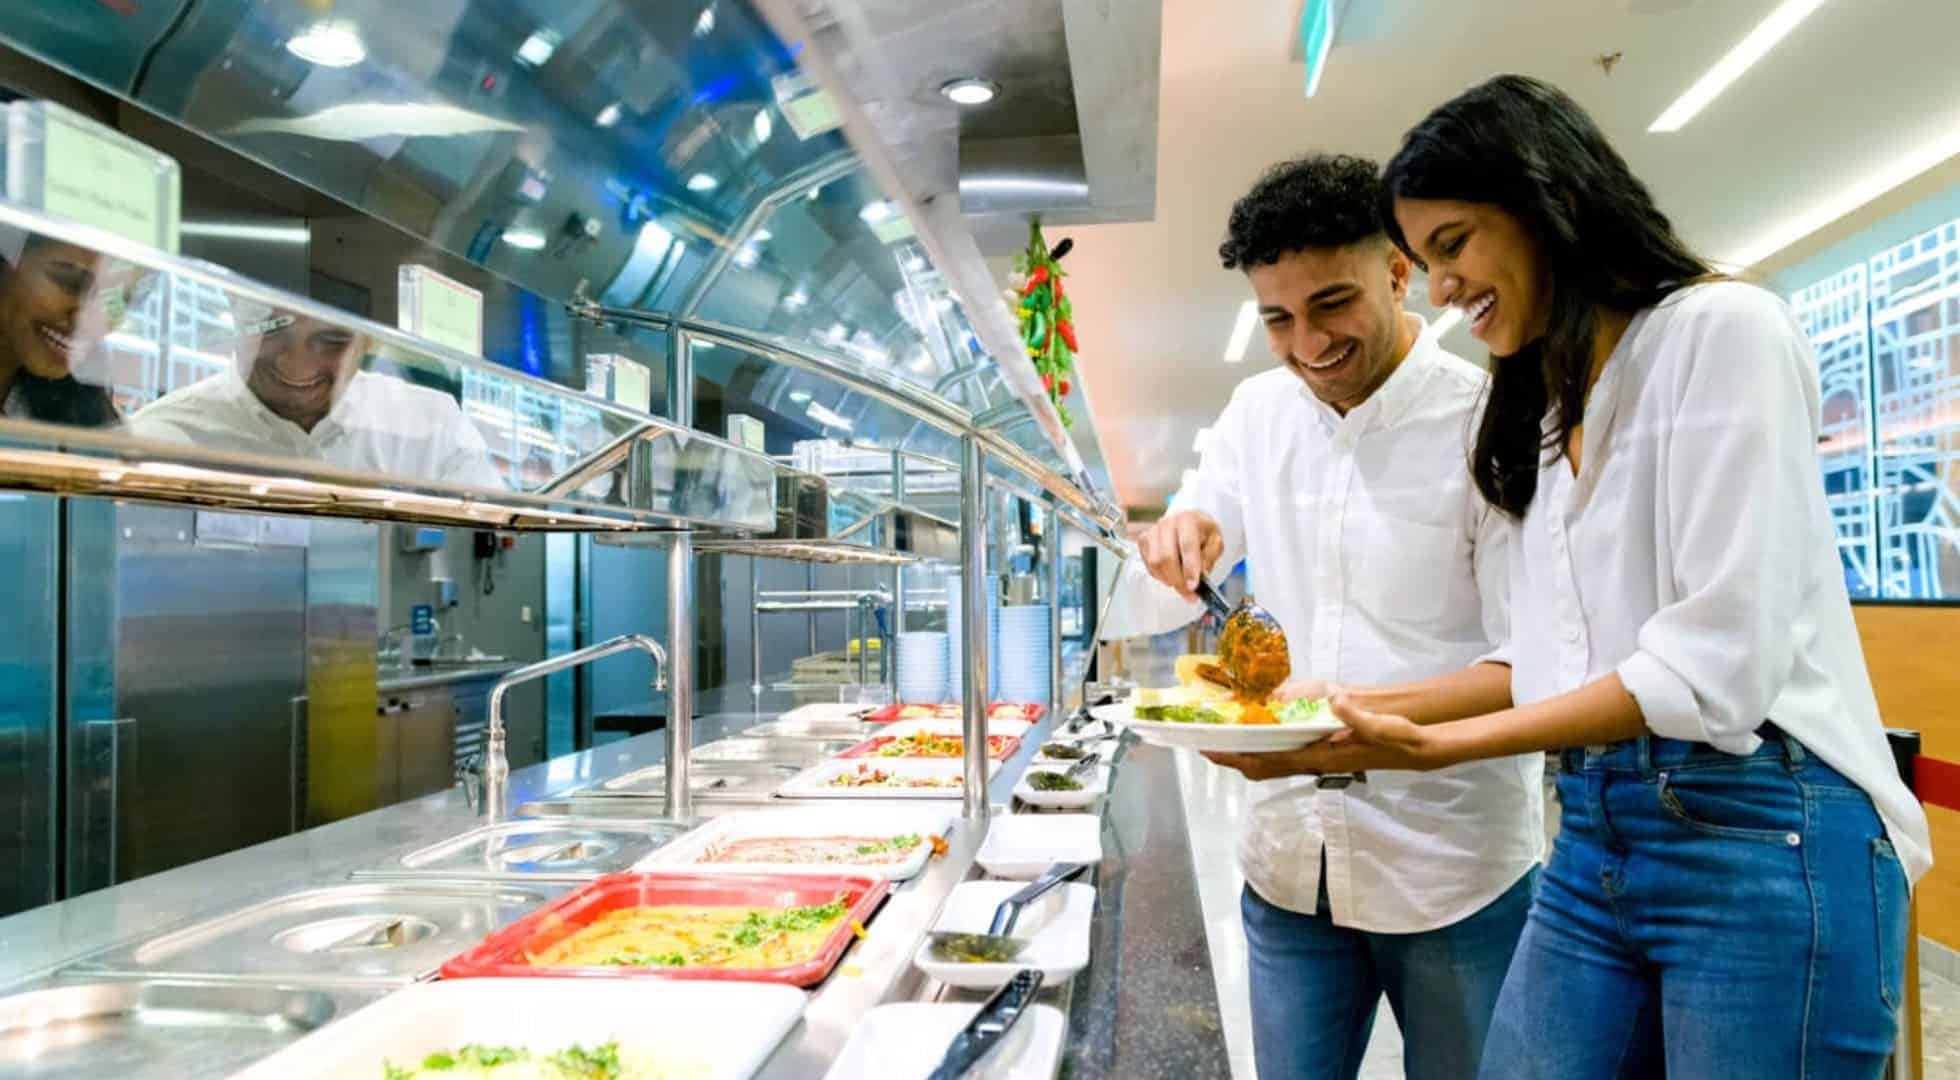 genting dream cruises - resorts world at sea - halal cuisine